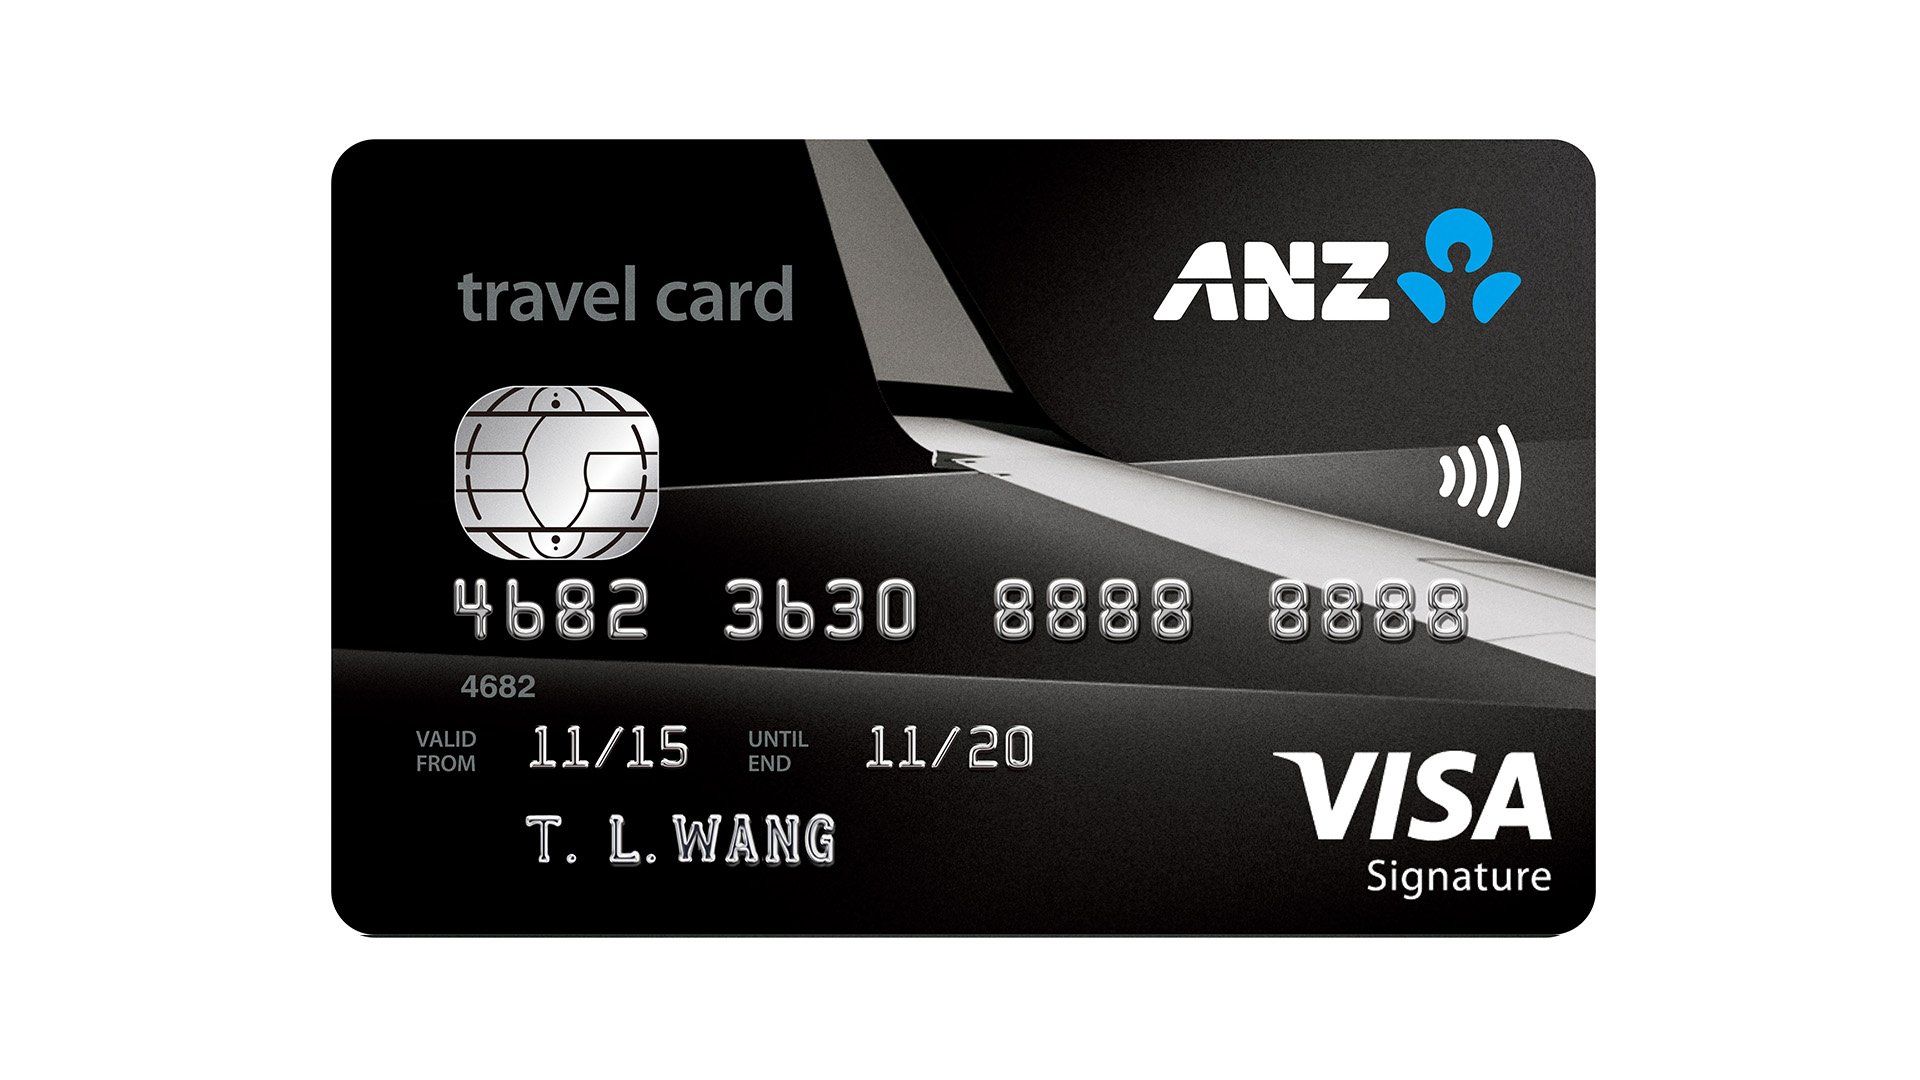 anz travel card signature